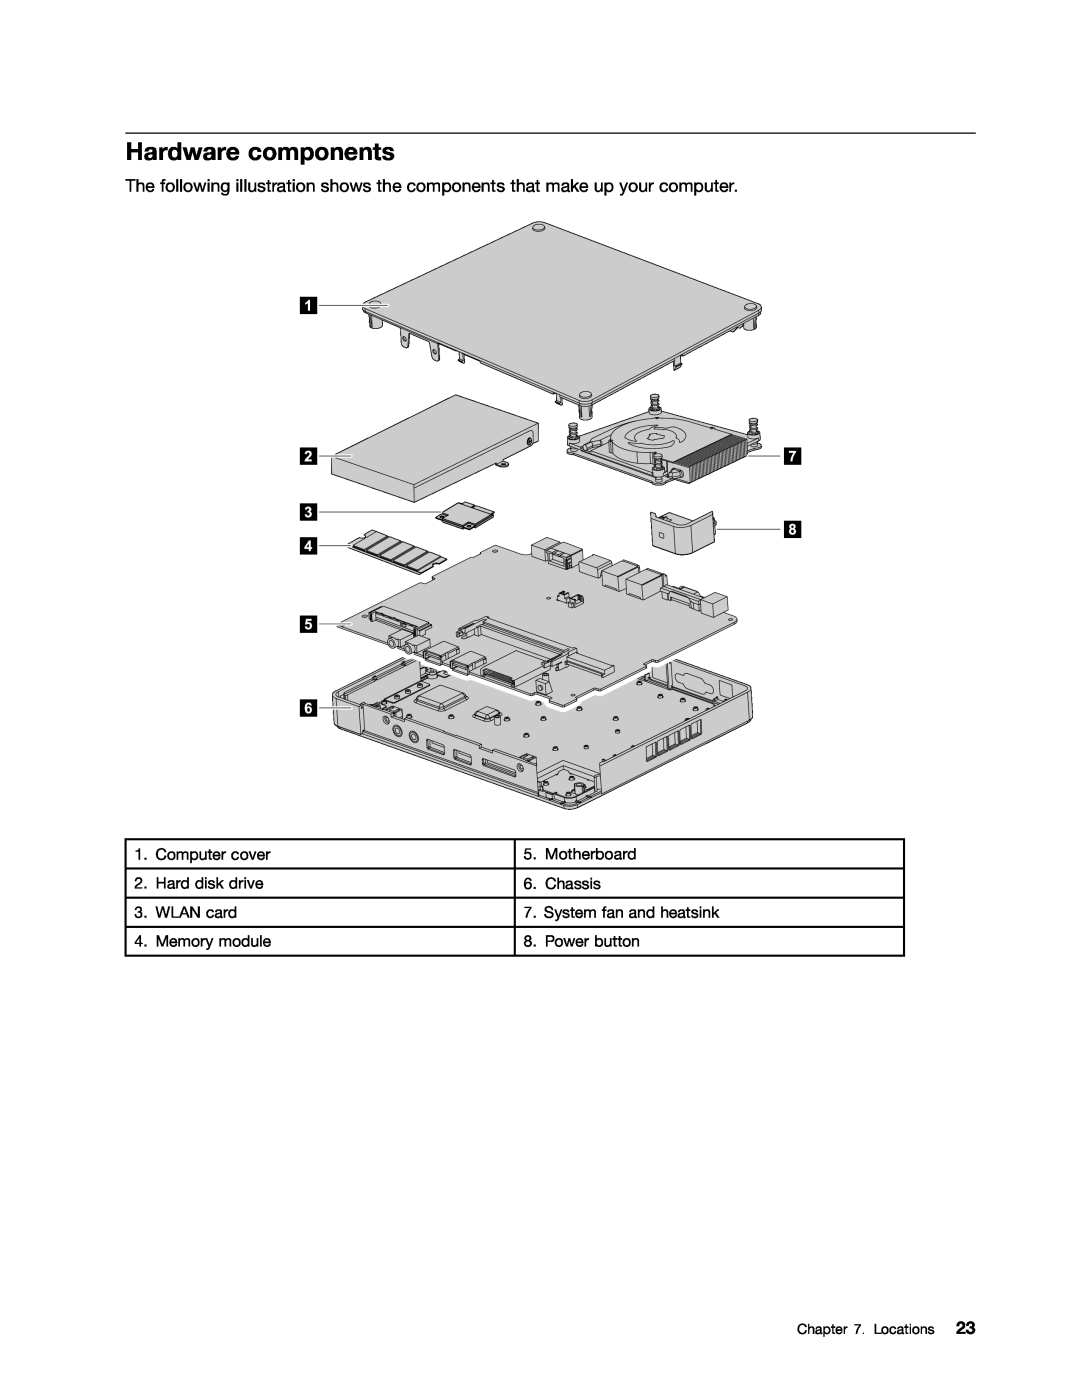 Lenovo Q180 manual Hardware components, Locations 